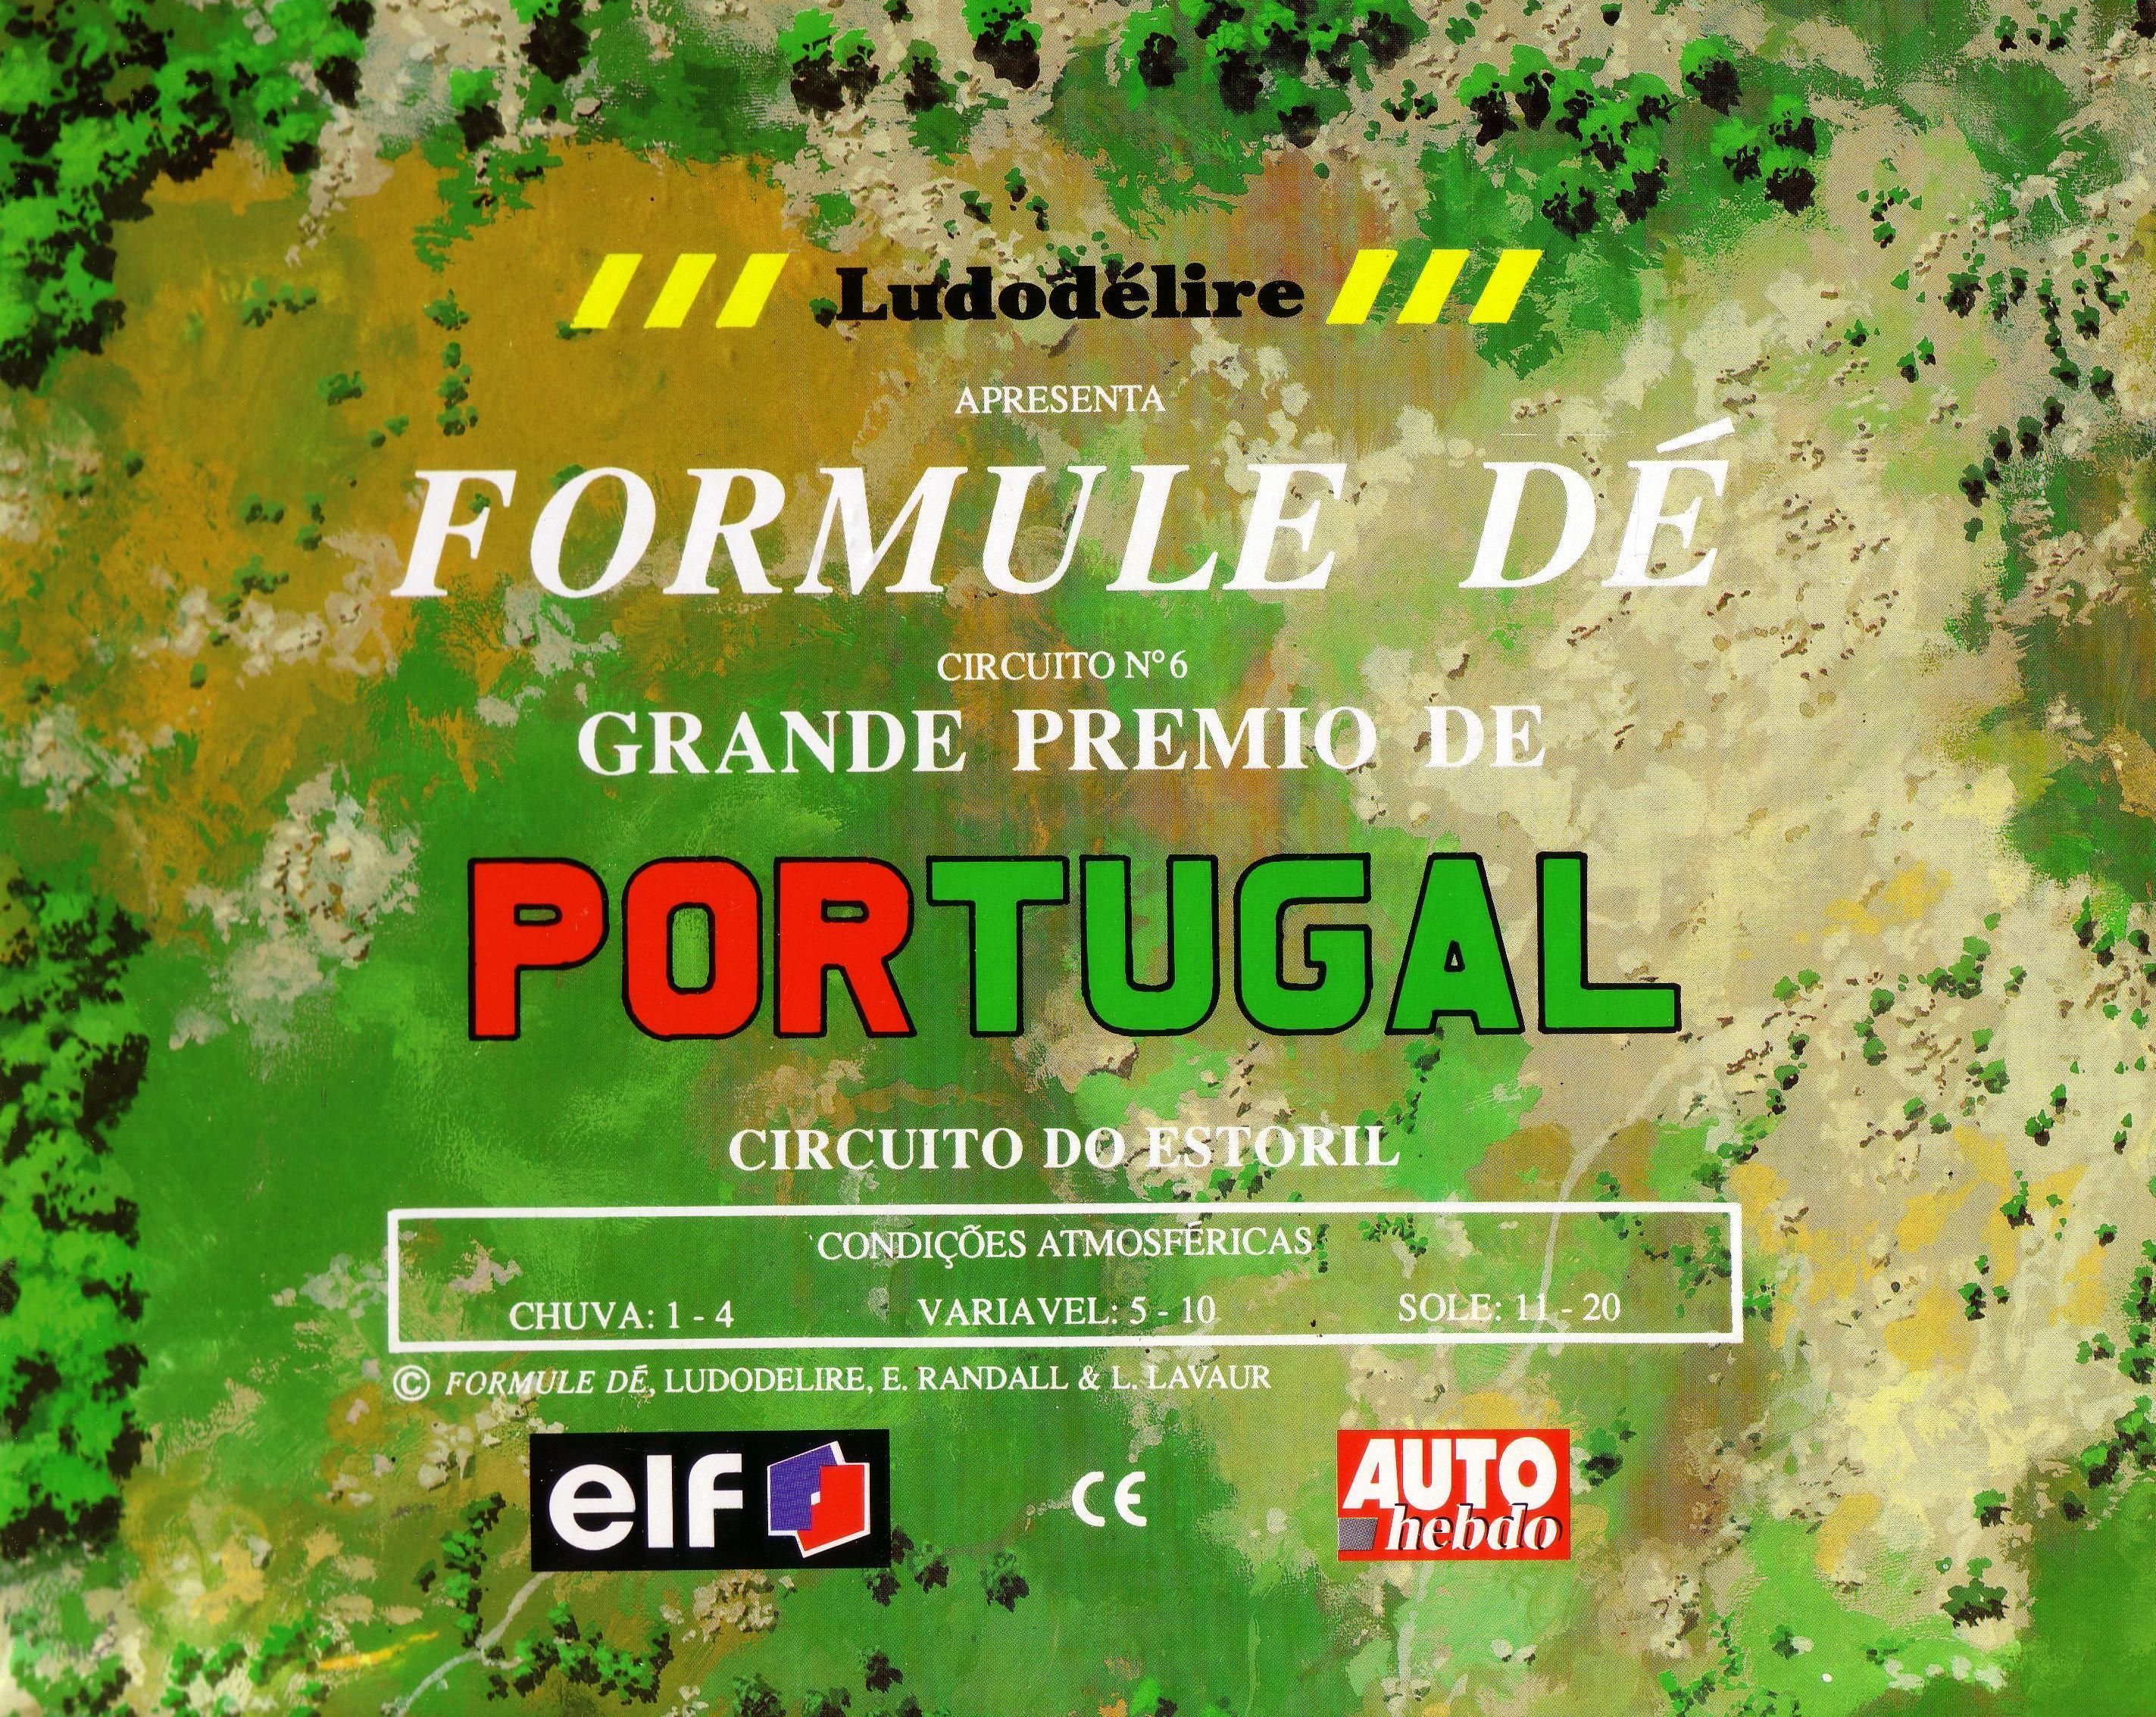 Formule Dé Circuit № 6: GRANDE PREMIO DE PORTUGAL – Circuito do Estoril